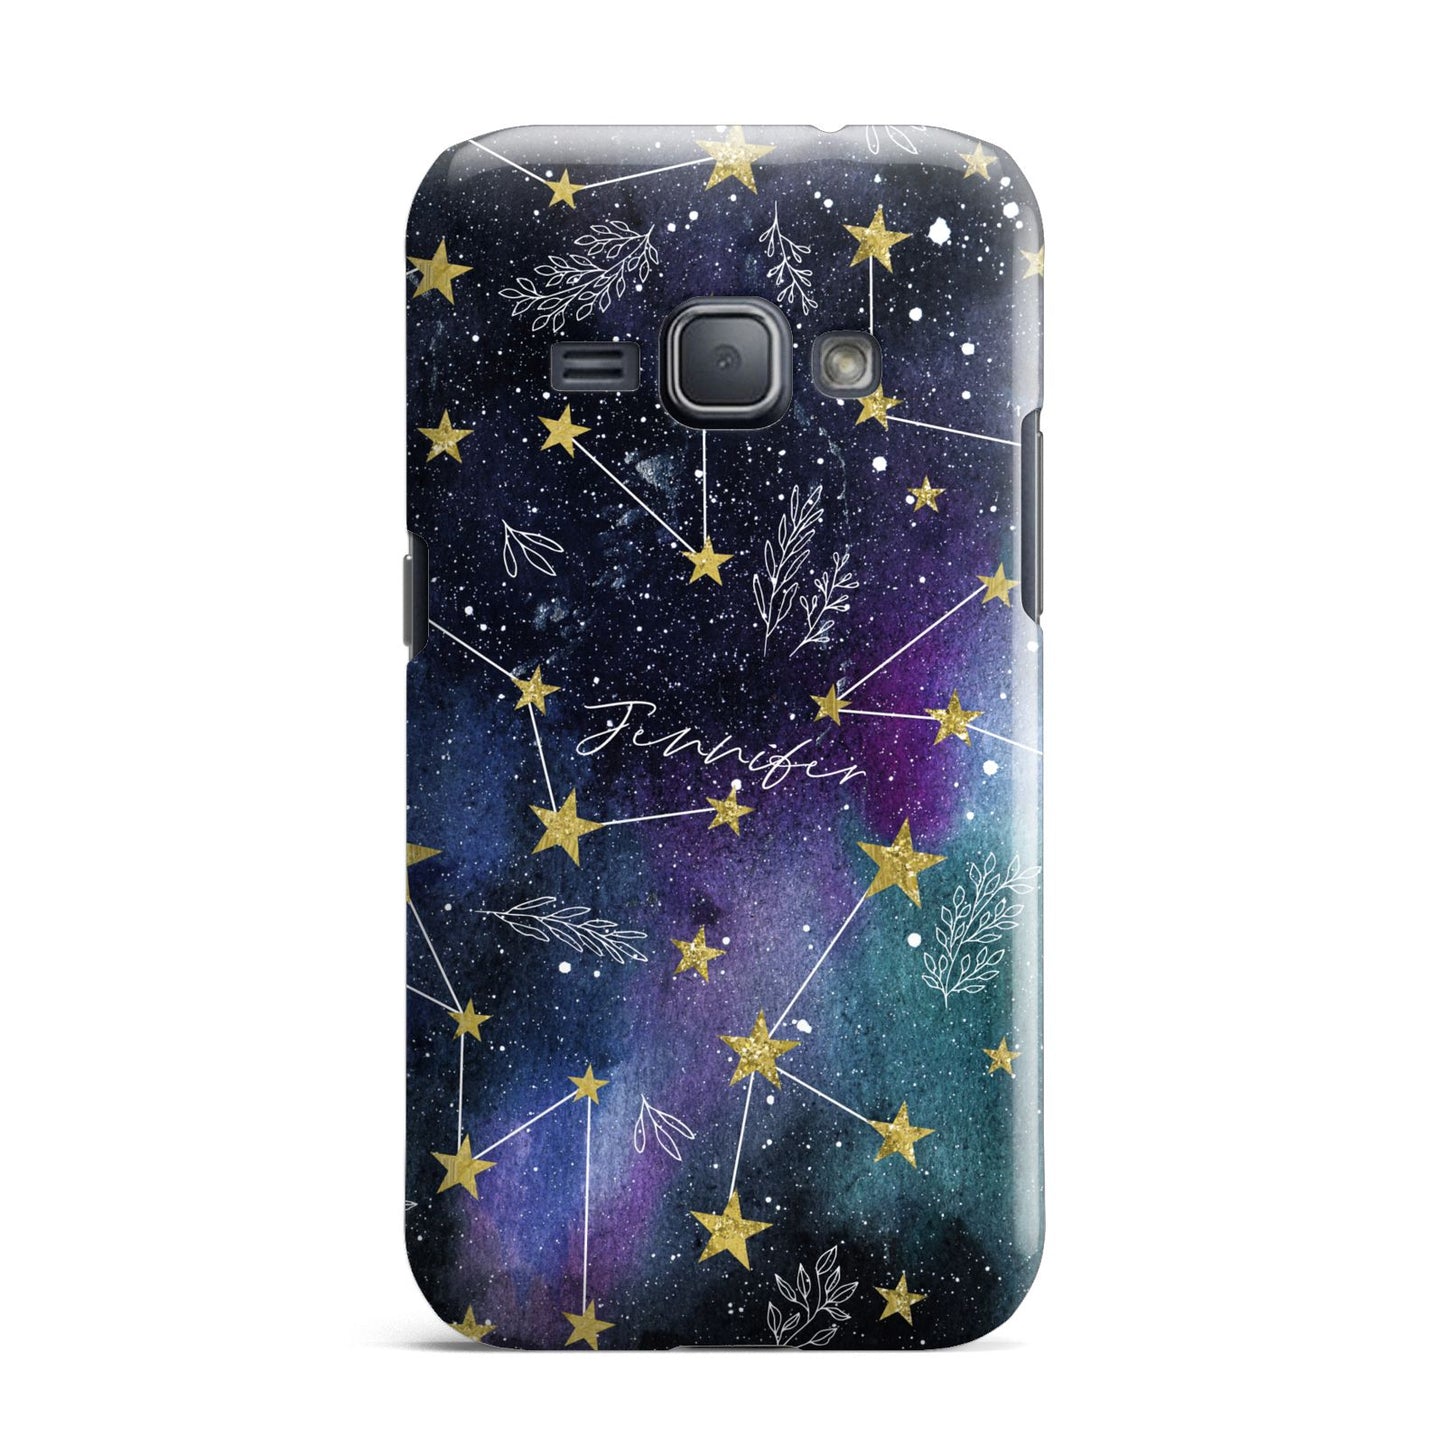 Personalised Constellation Samsung Galaxy J1 2016 Case